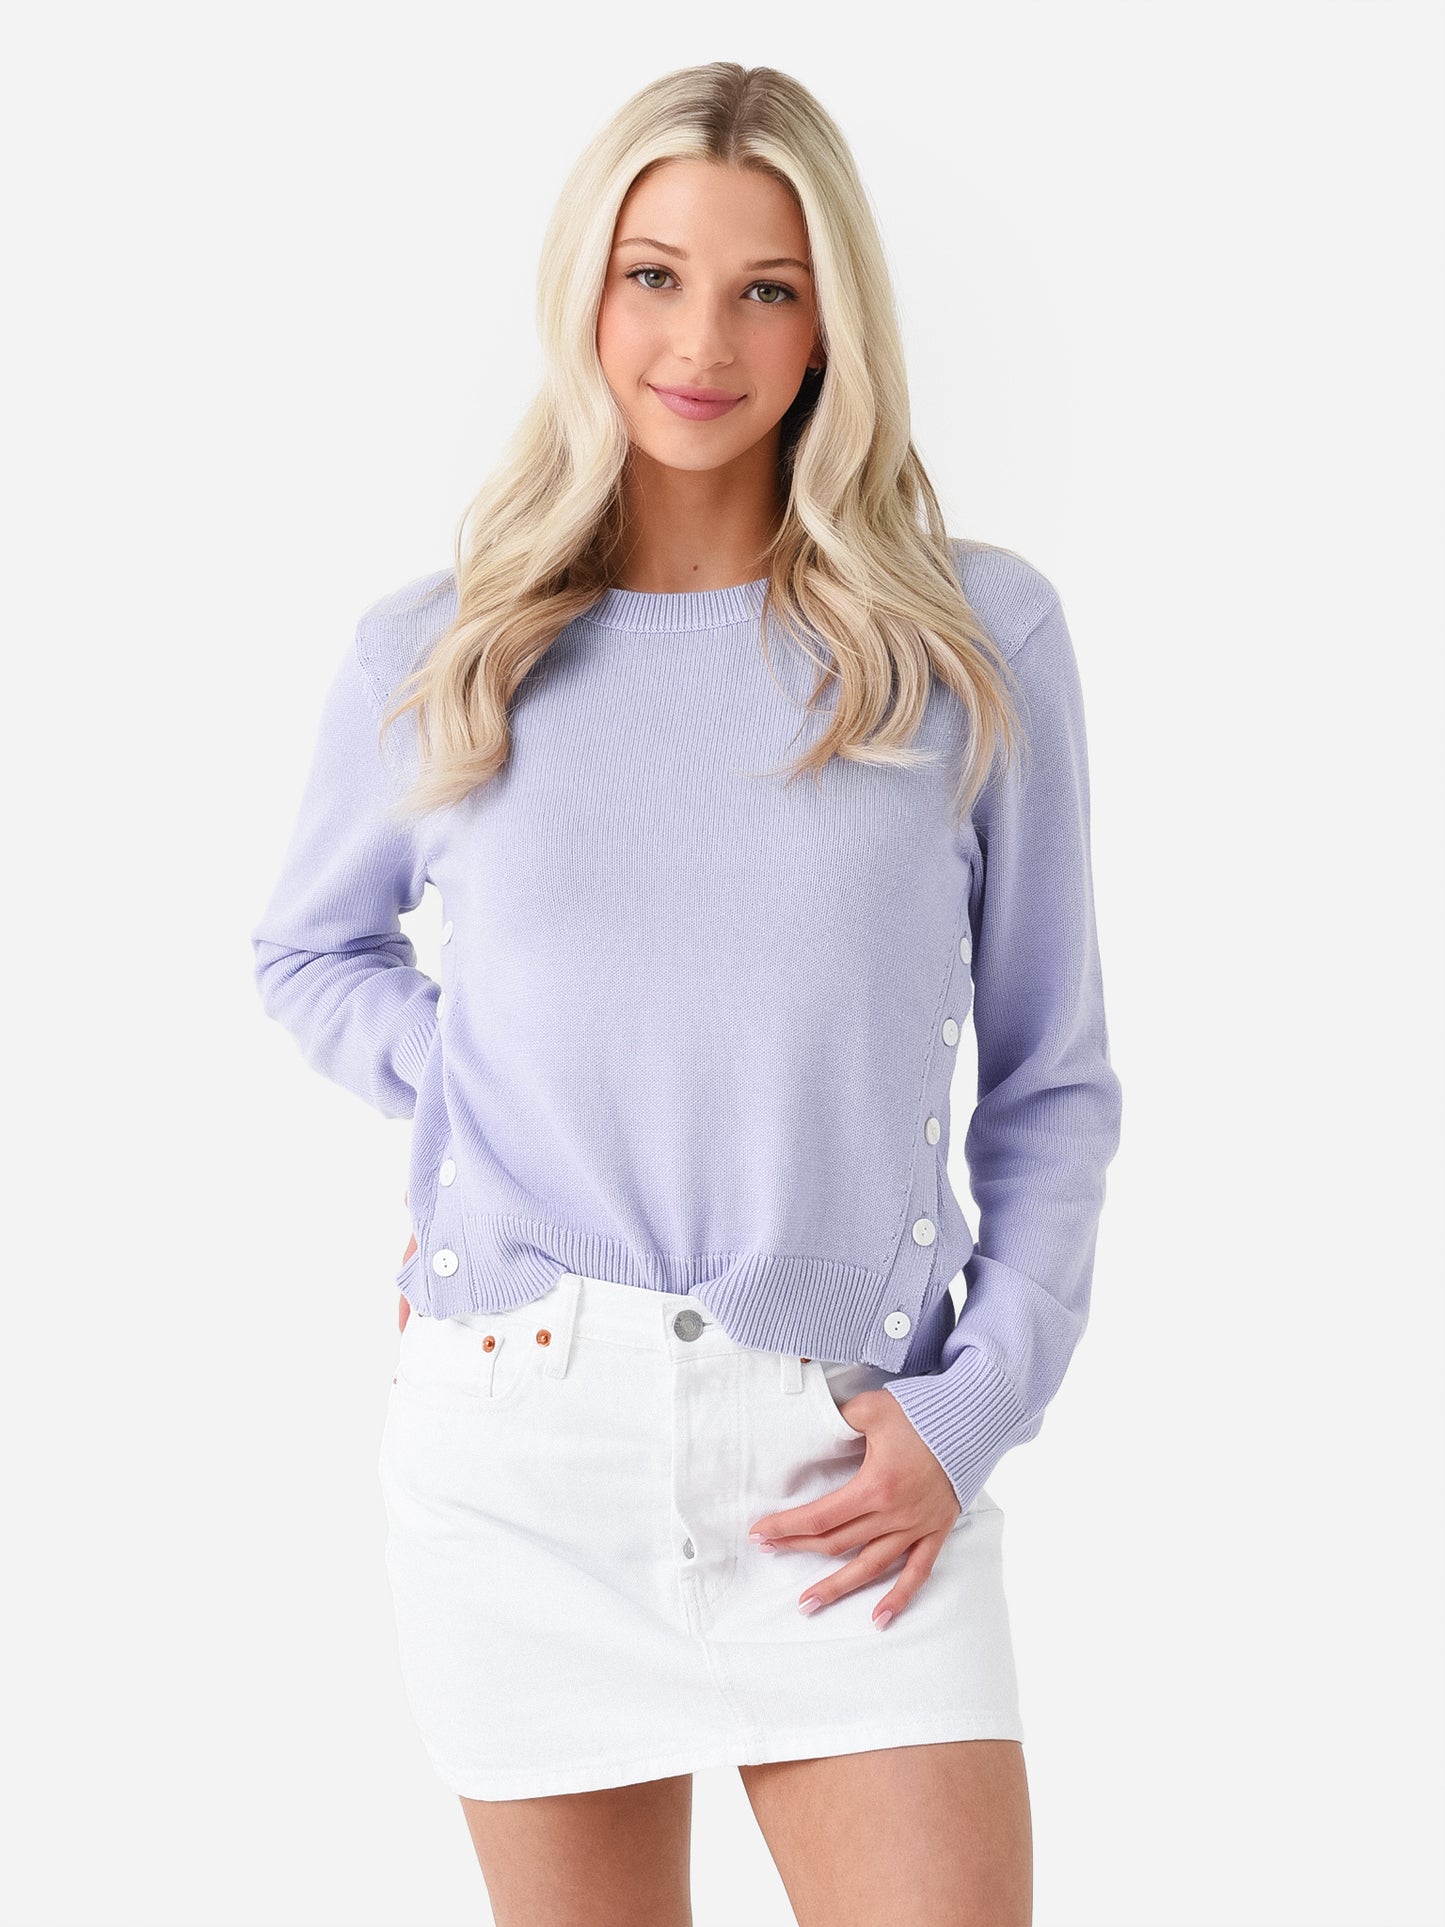 Kerri Rosenthal Women's Patty Sweater